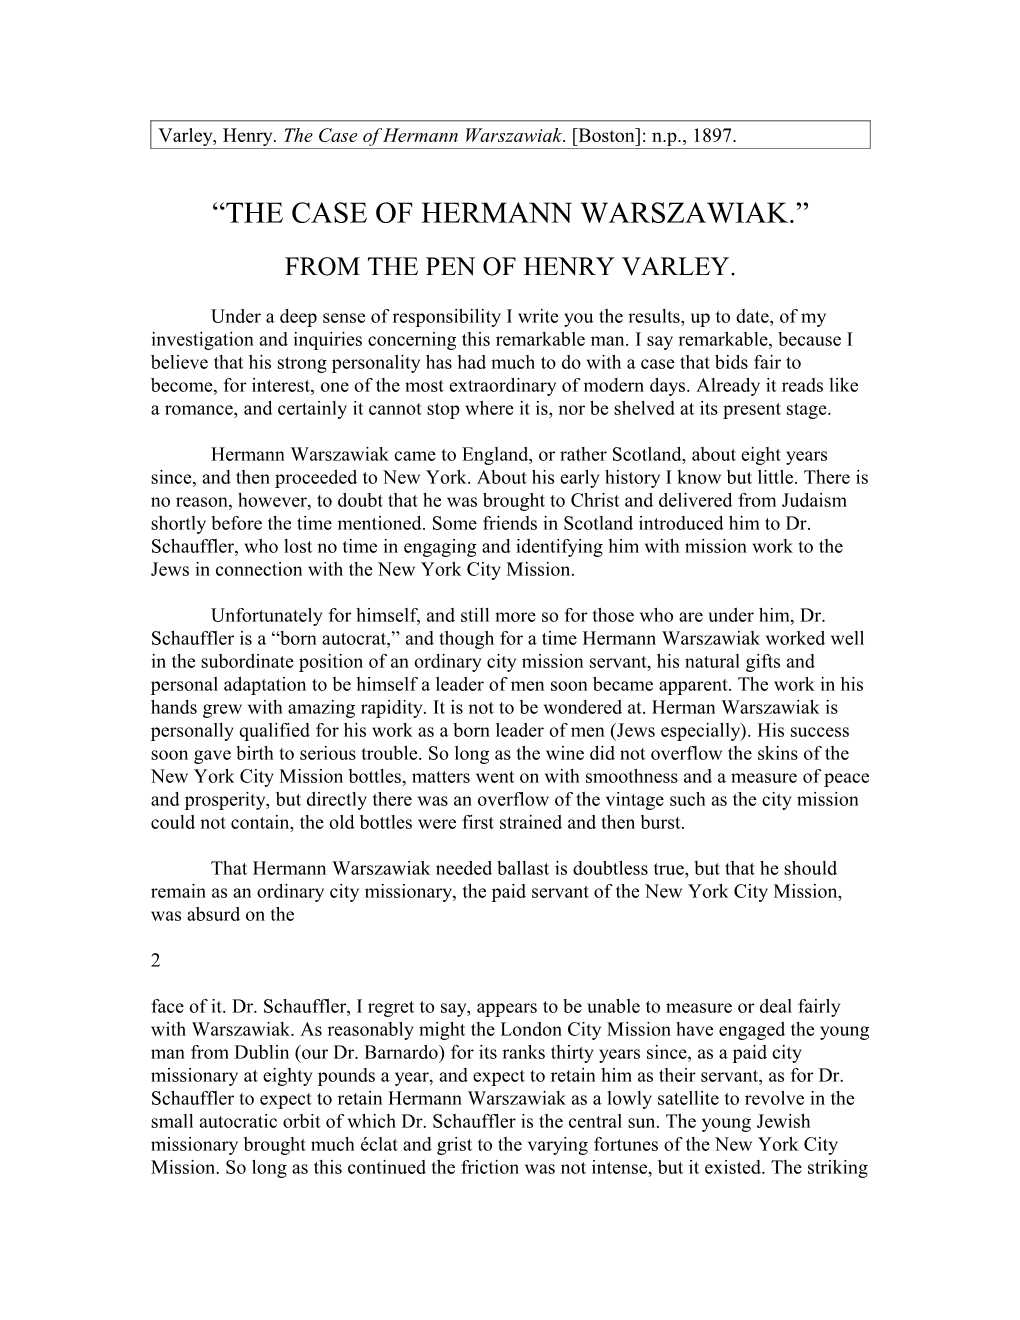 Varley, Henry. the Case of Hermann Warszawiak. Boston : N.P., 1897